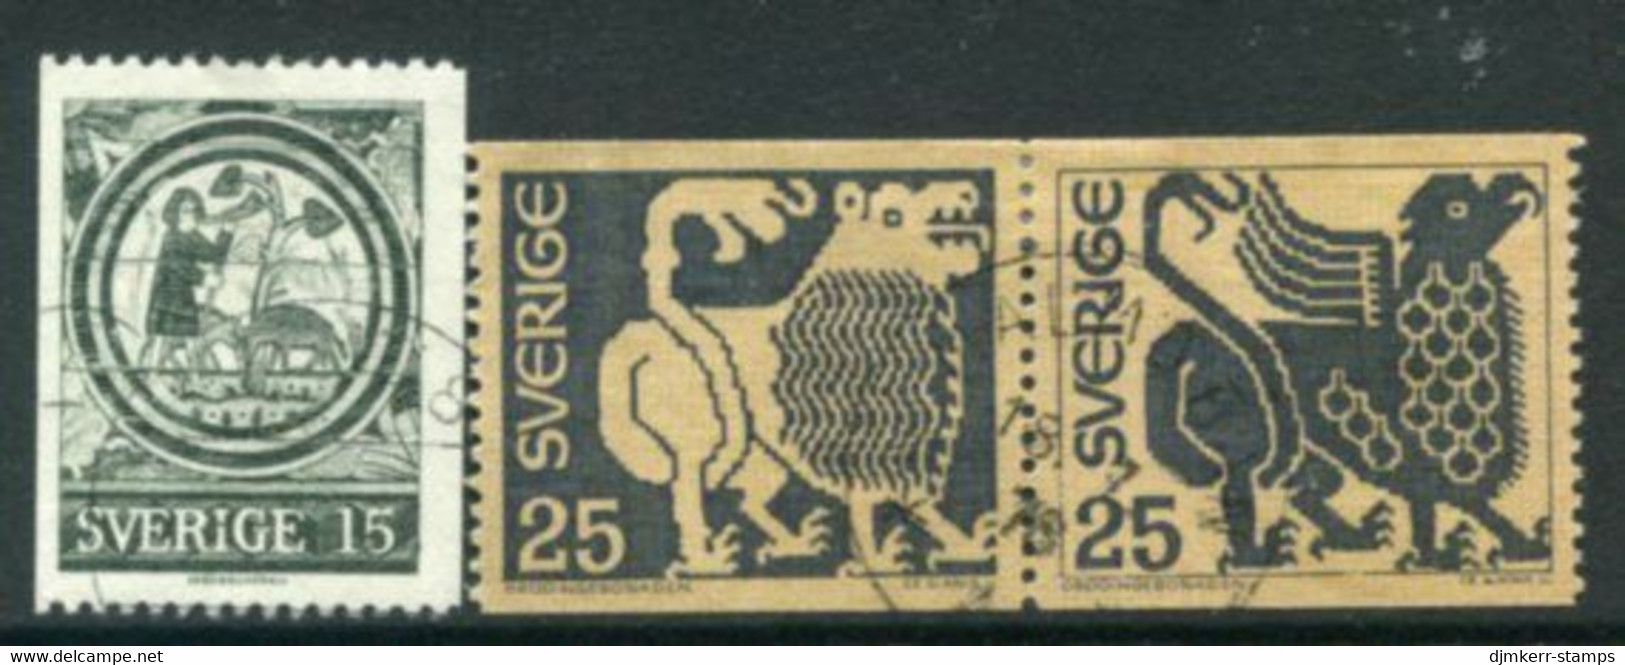 SWEDEN 1971 Definitive: Art Used.  Michel 706-08 - Usati